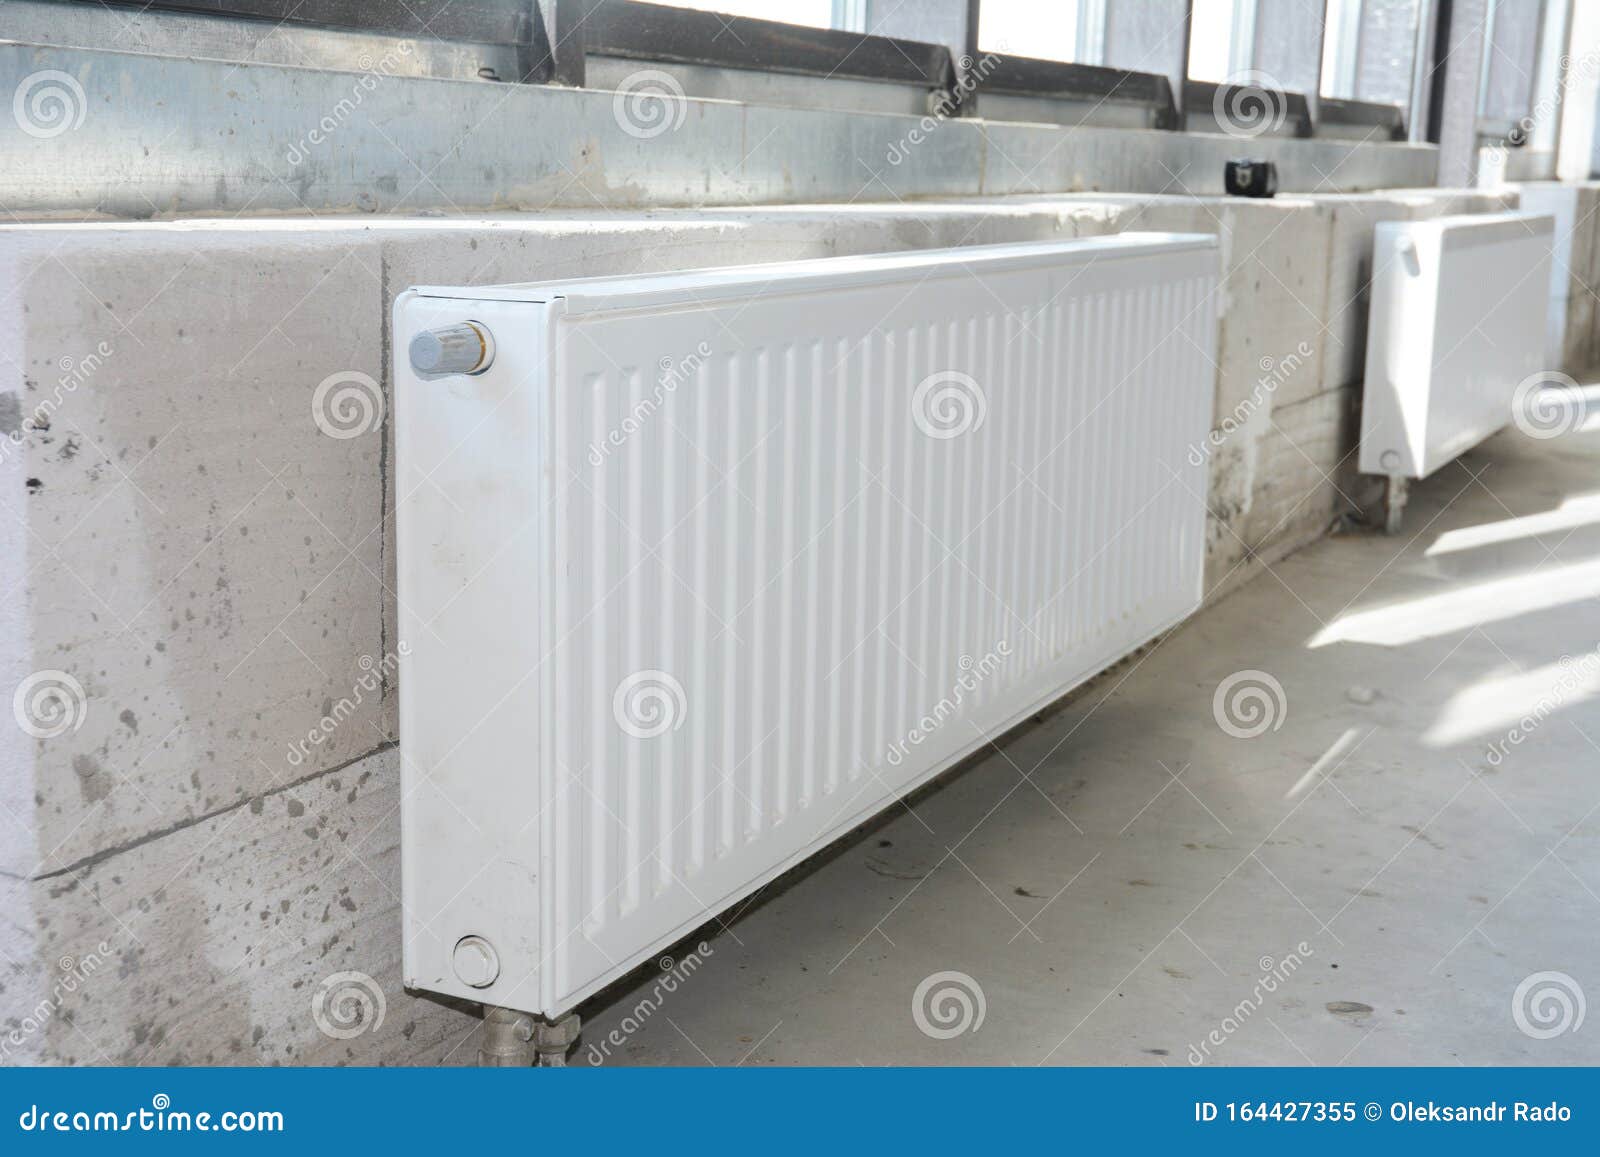 house  radiator heating. installing radiator heating at home.  white metal radiators heating